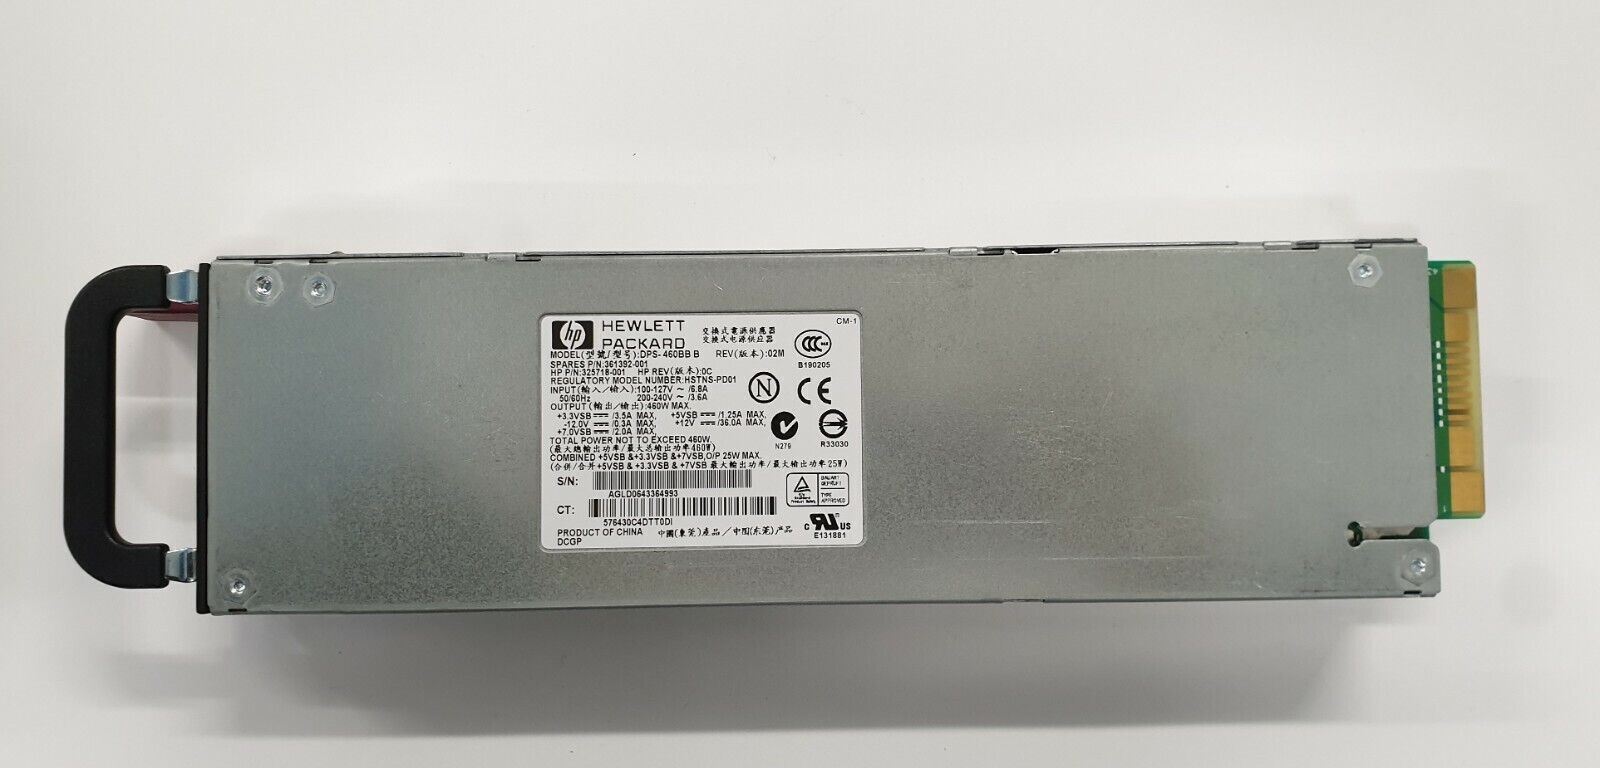 Genuine HP 460W DL360 G4 Power Supply Unit 325718-001 361392-001 HSTNS-PD01 